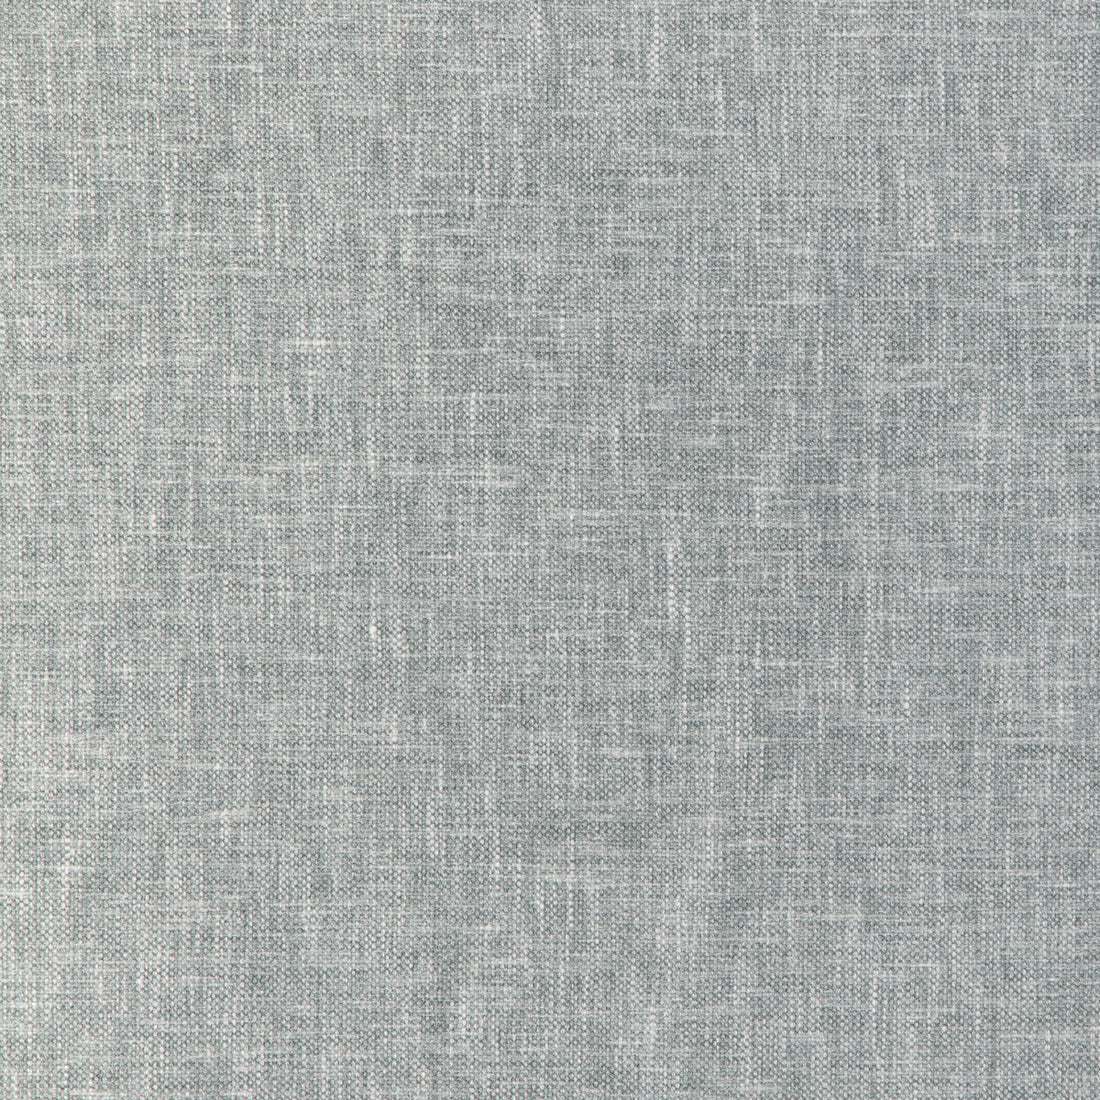 Kravet Smart fabric in 36657-11 color - pattern 36657.11.0 - by Kravet Smart in the Performance Kravetarmor collection